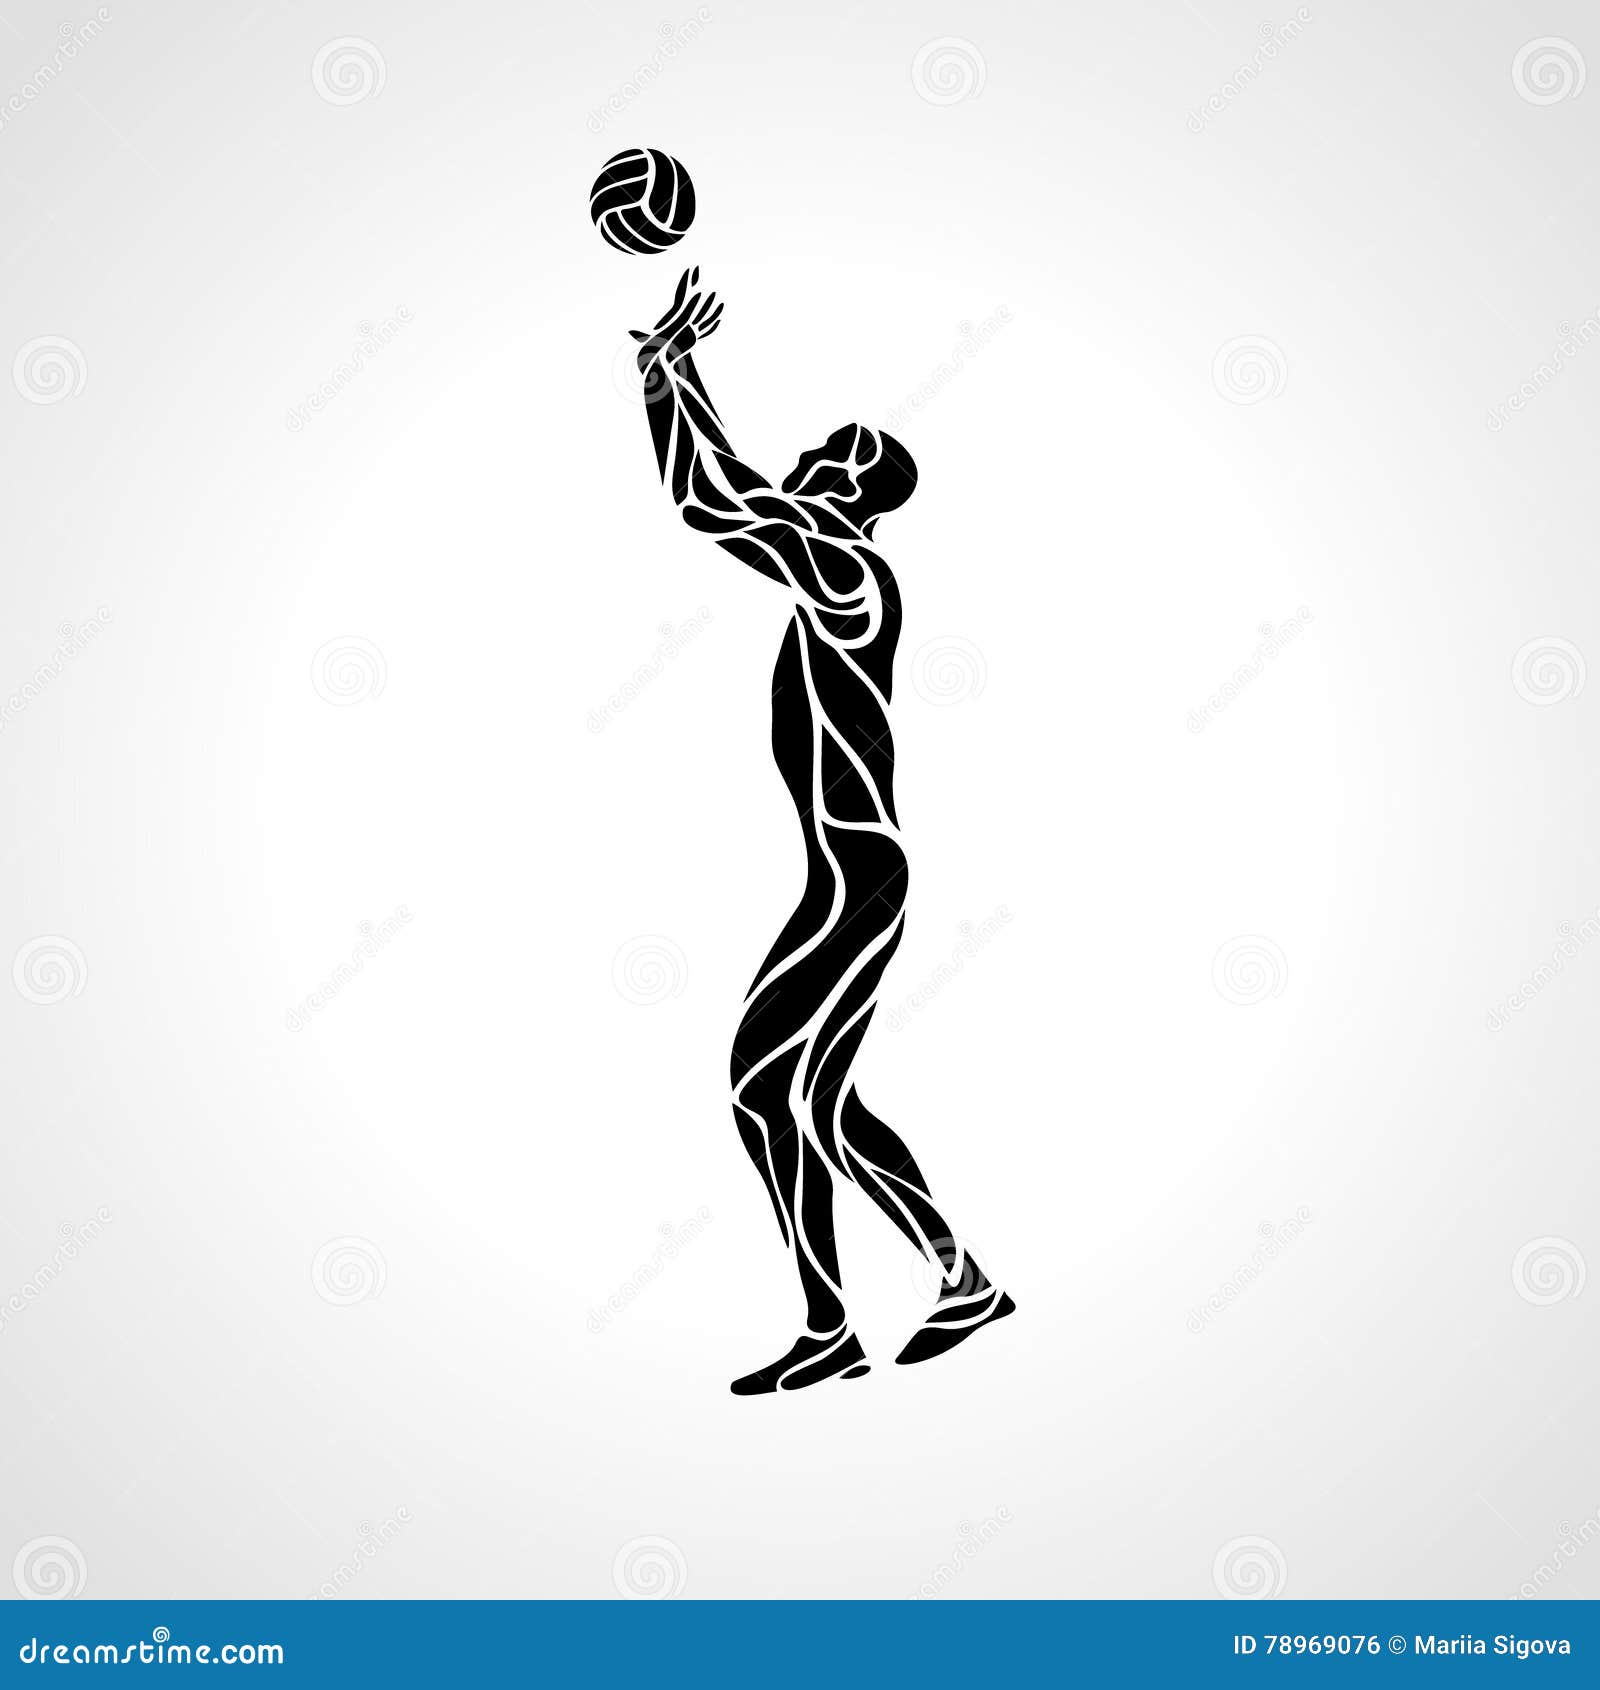 Volleyball Setter Silhouette, Vector Illustration Stock Vector ...